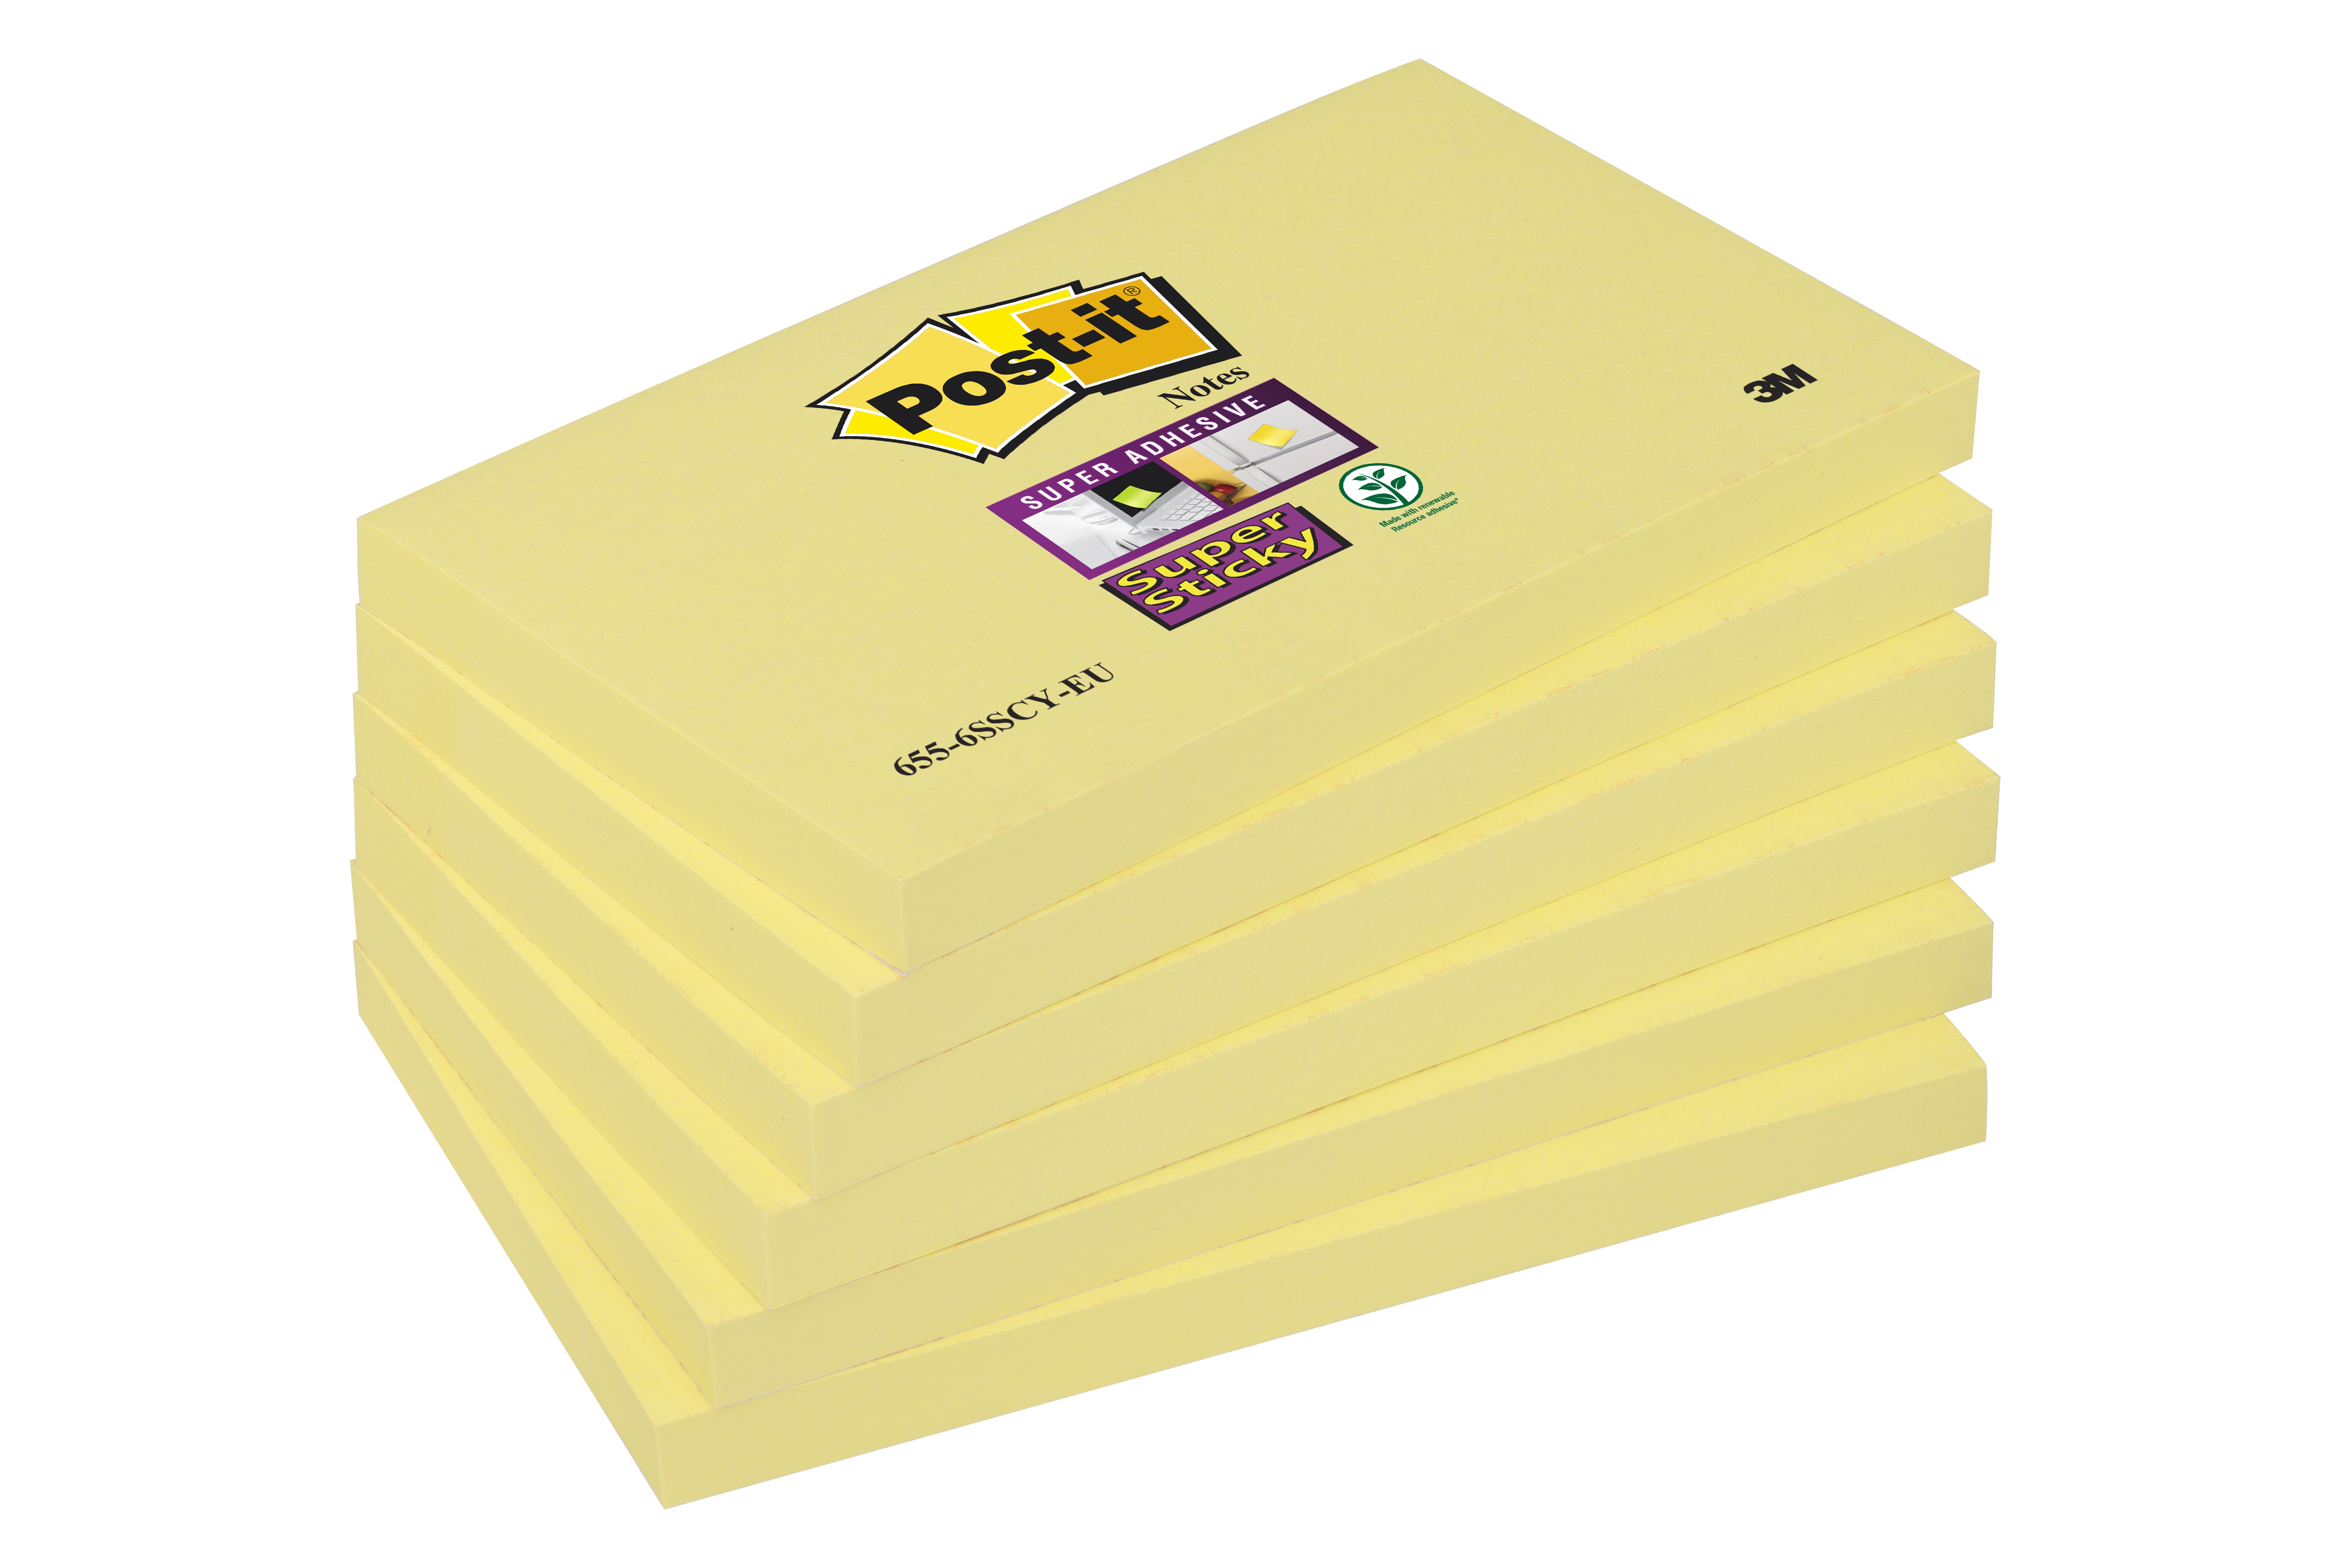 Post-It Bloc-Note Adhésif Super Sticky Notes, 127 X 76 Mm